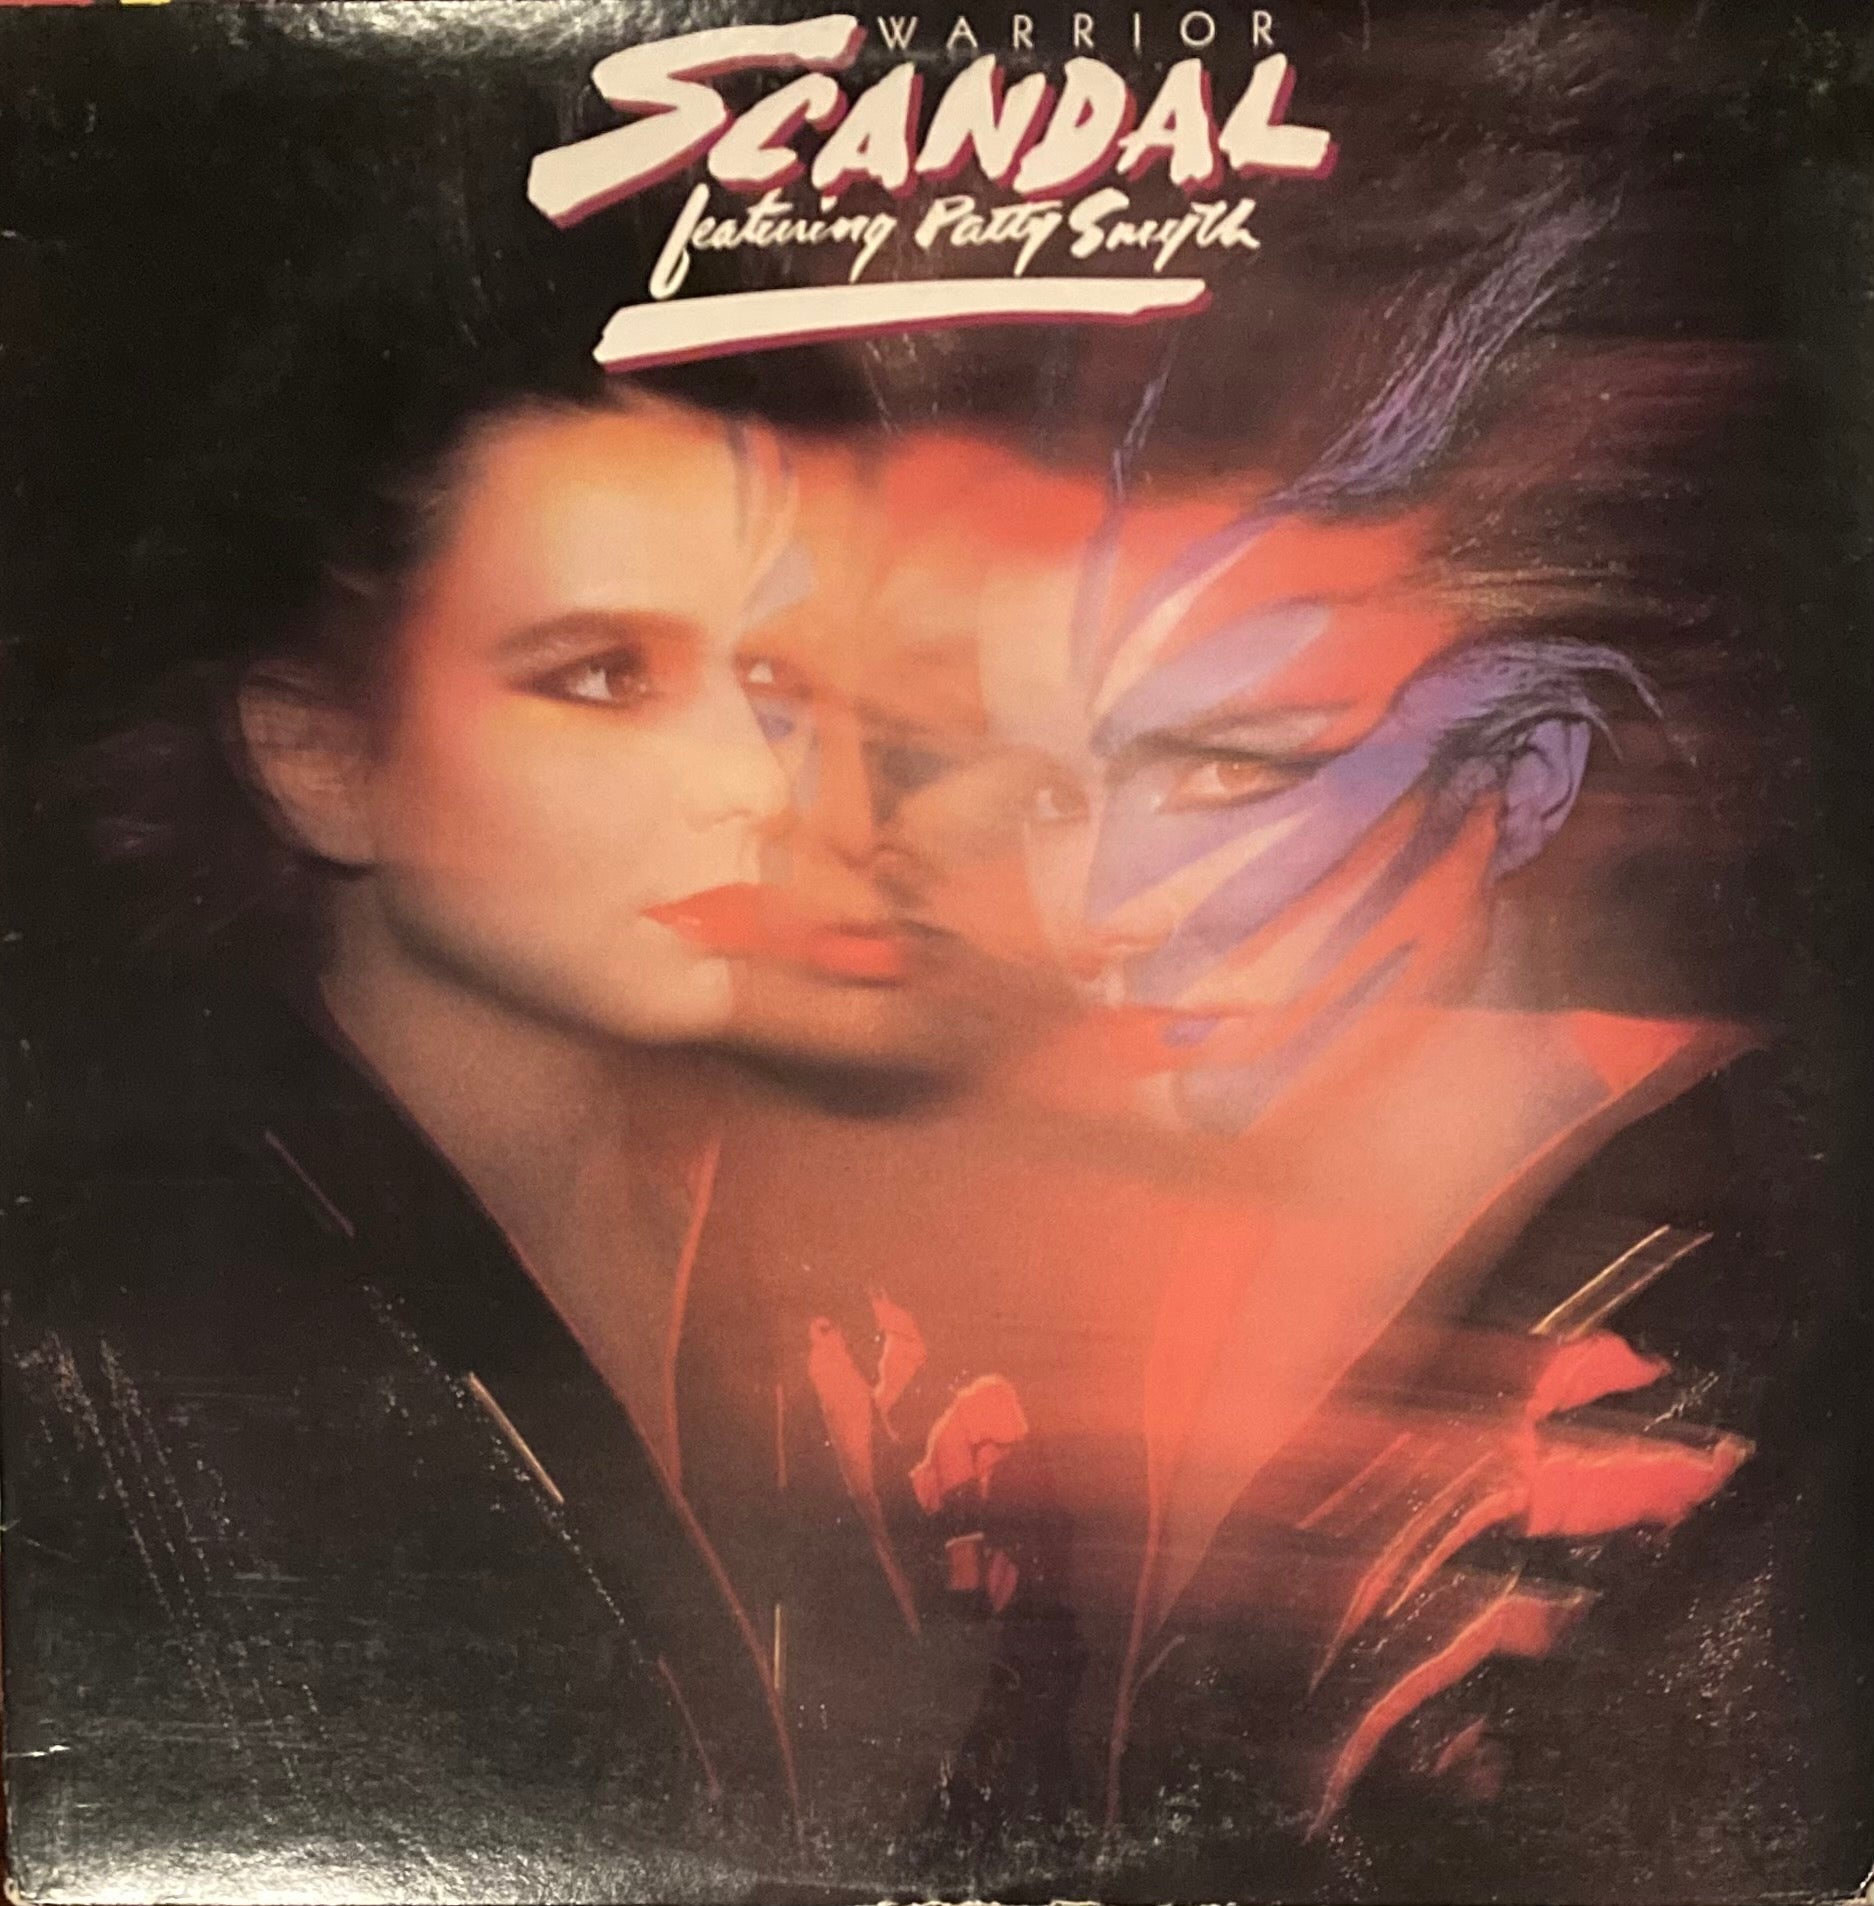 Scandal feat. Patti Smyth “Warrior” LP (1984)